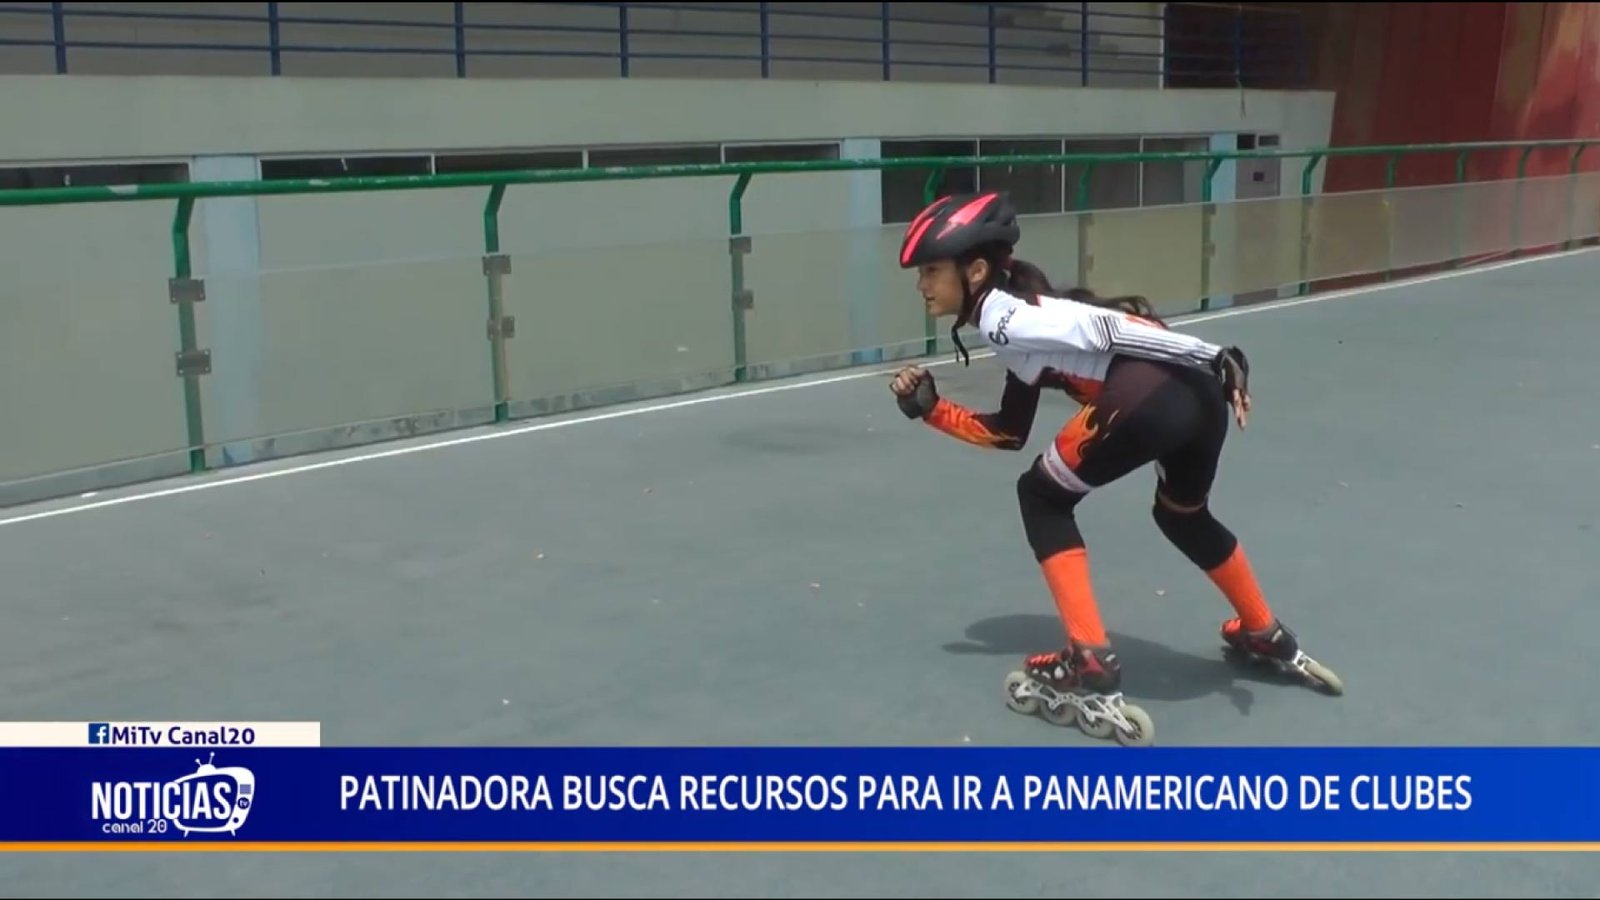 PATINADORA BUSCA RECURSOS PARA IR A PANAMERICANO DE CLUBES